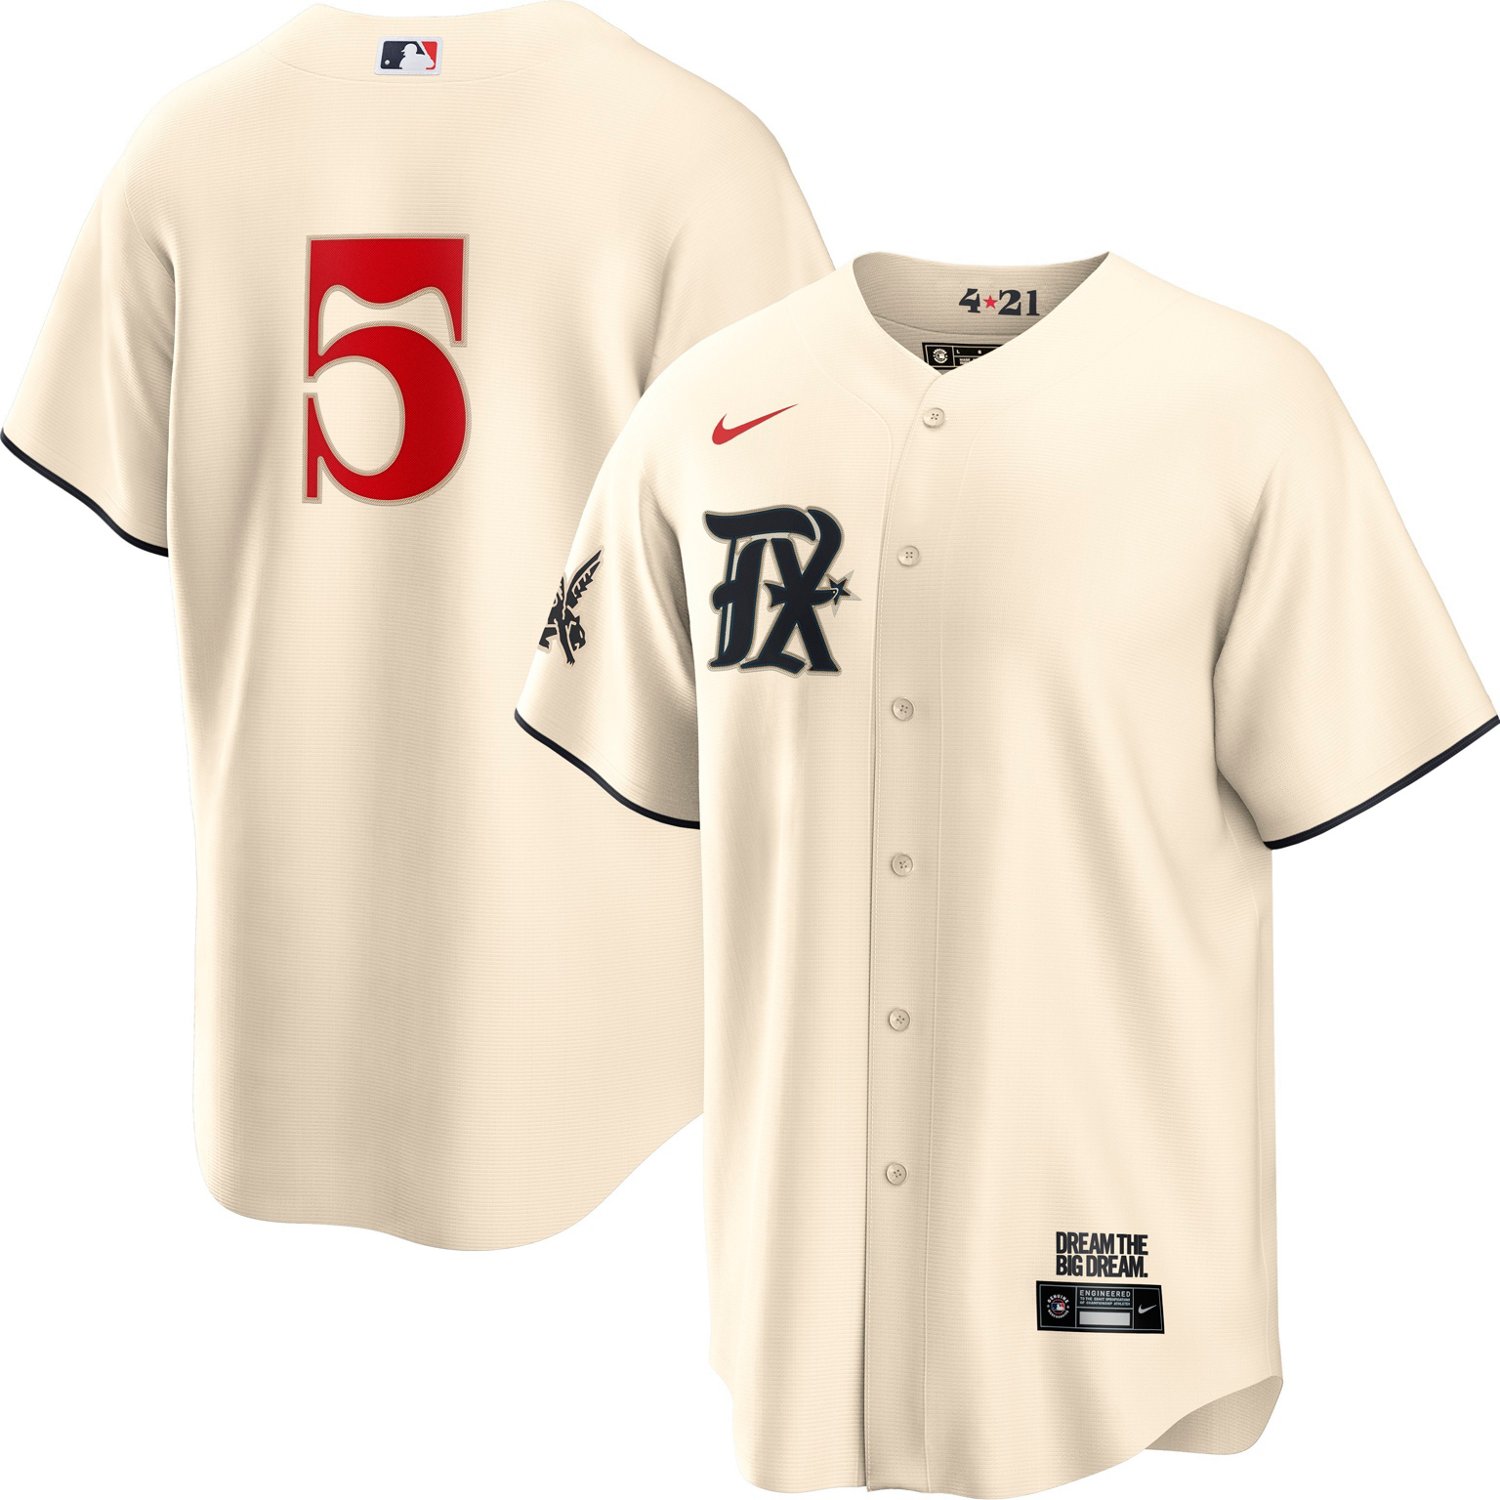 Texas Rangers: Grading the new Nike uniforms for 2020